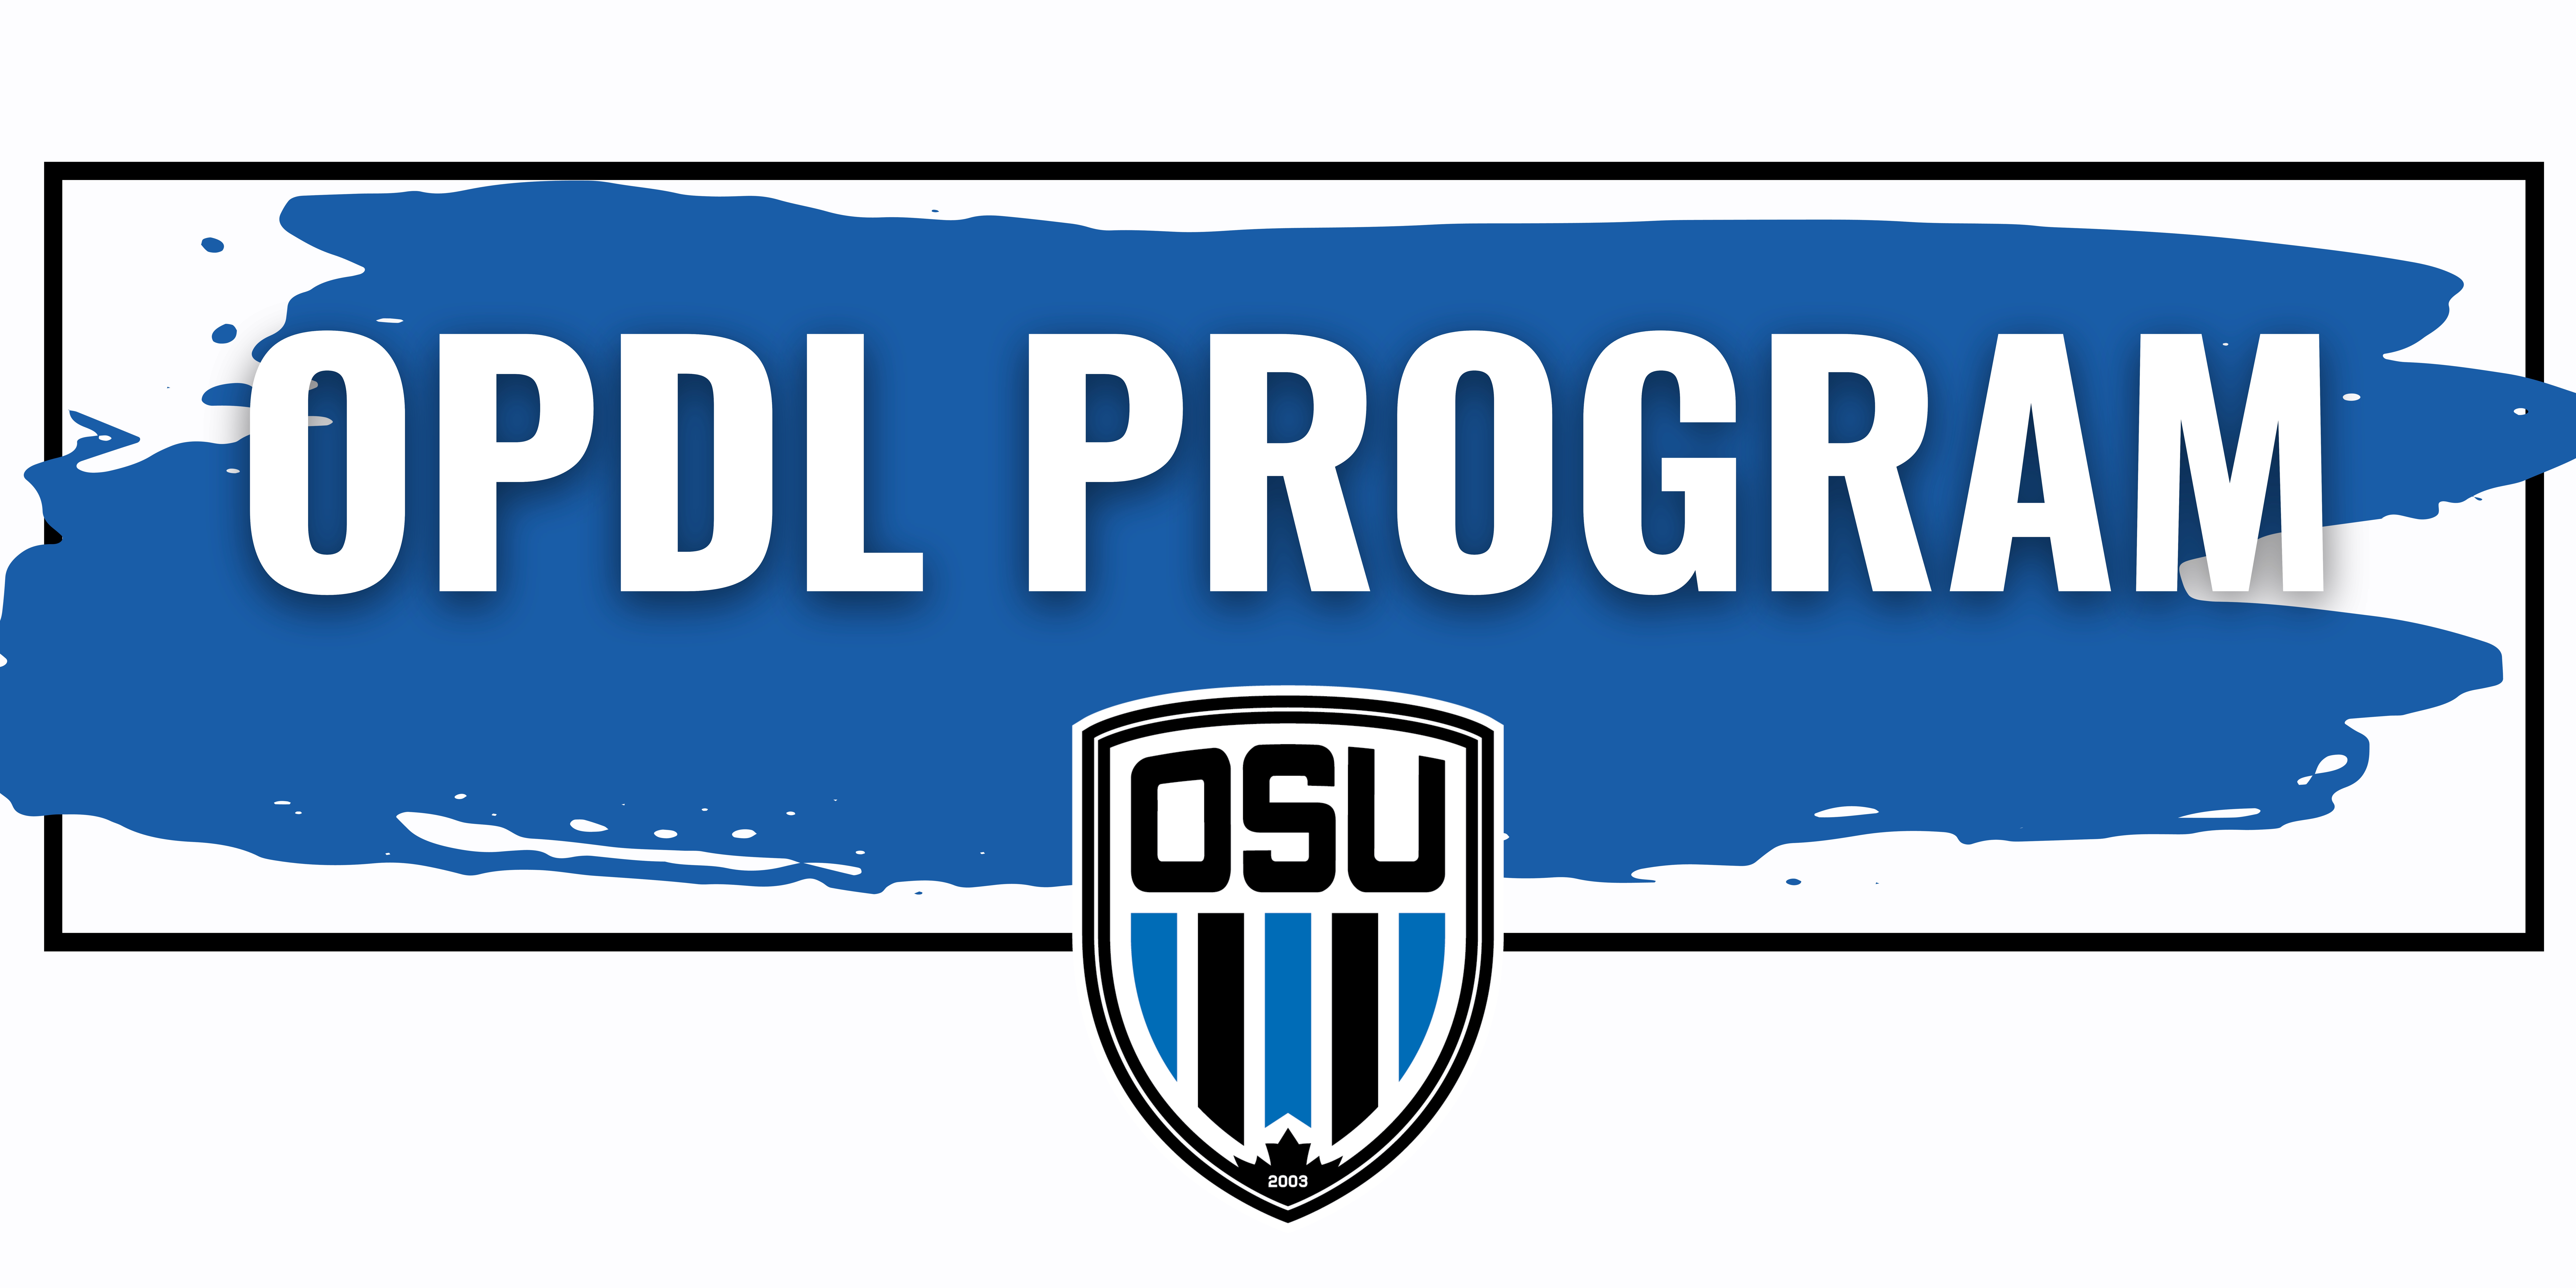 OPDL Program